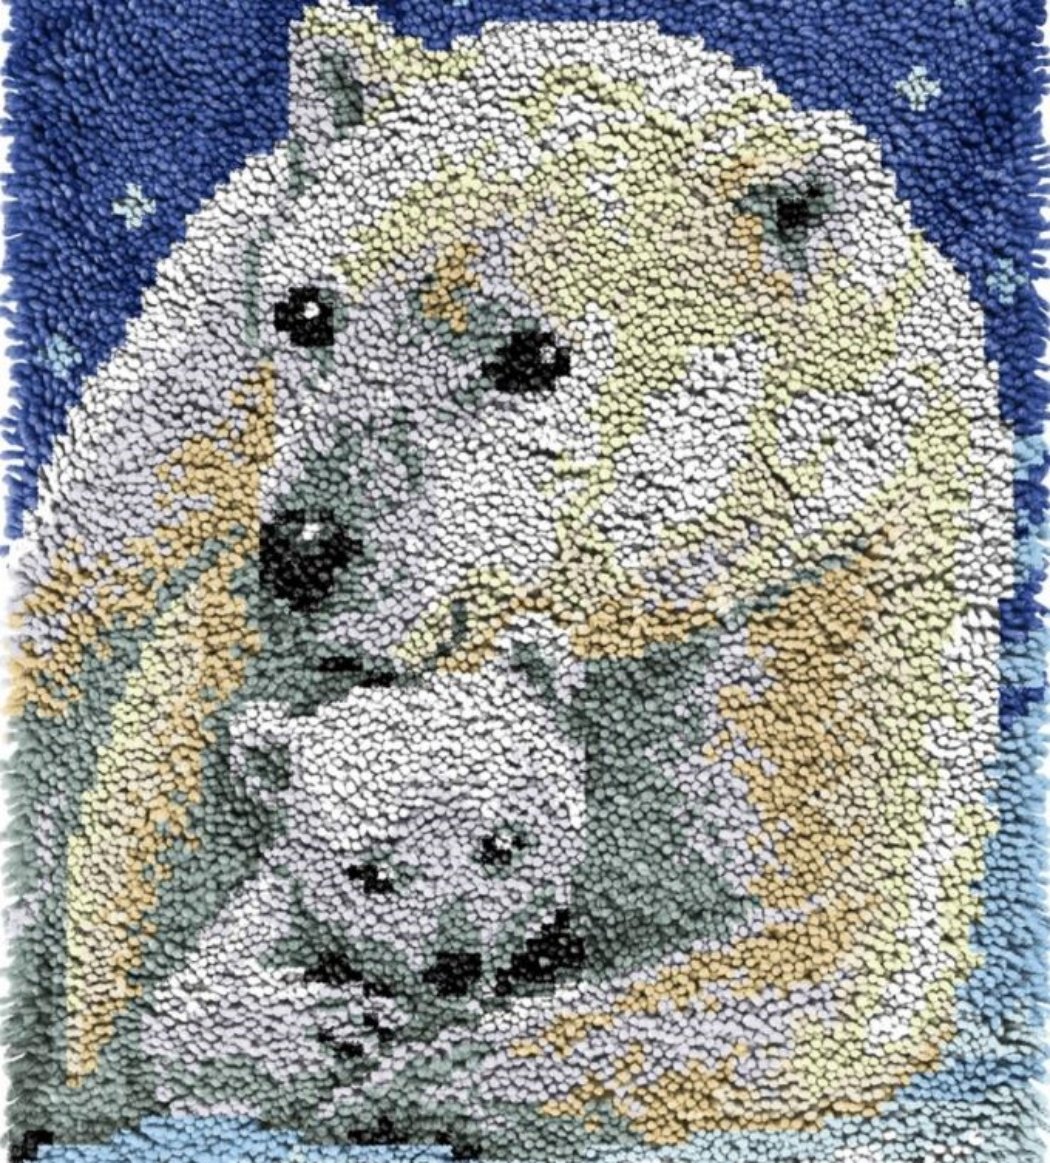 Rug Making Latch Hooking Kit | Polar Bear (64x48cm blank canvas)